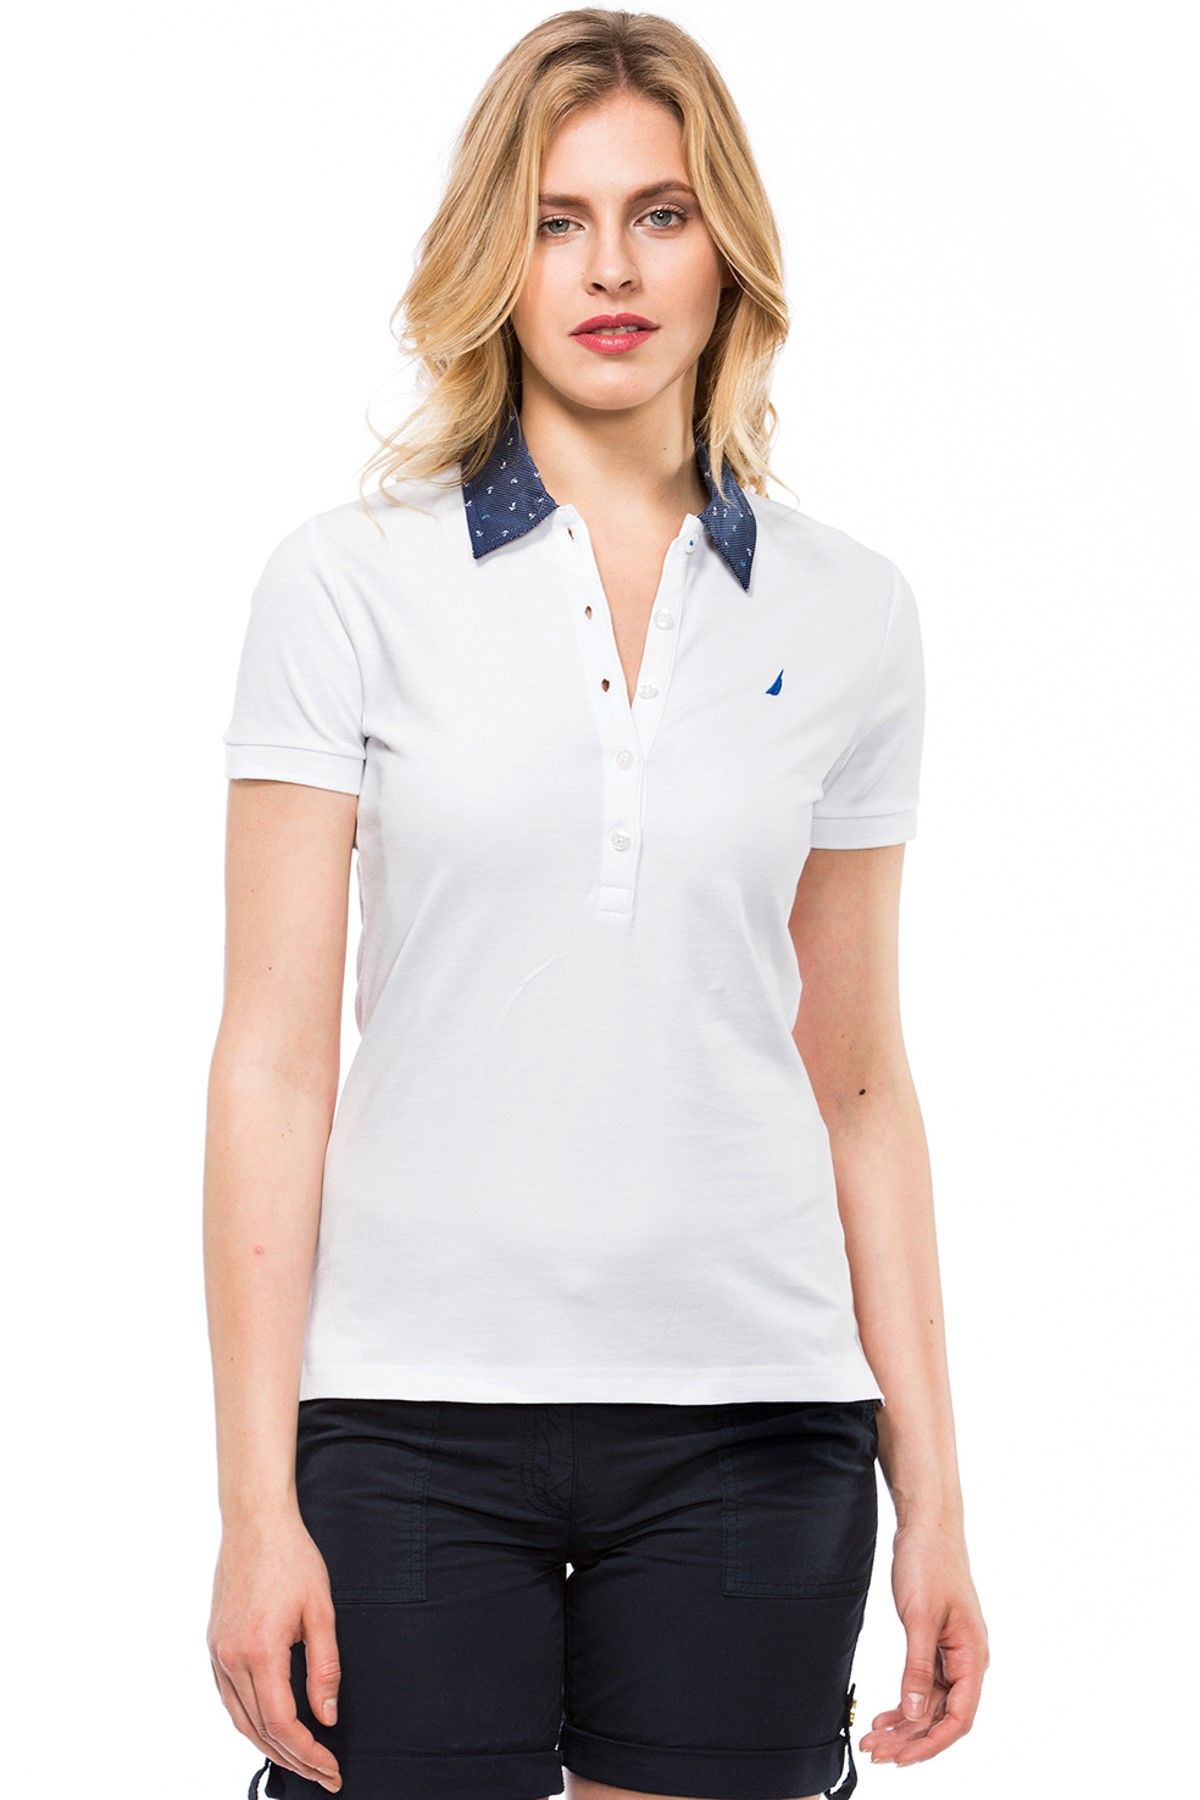 Nautica Kadın Beyaz Polo Yaka Beyaz T-shirt 519K005T